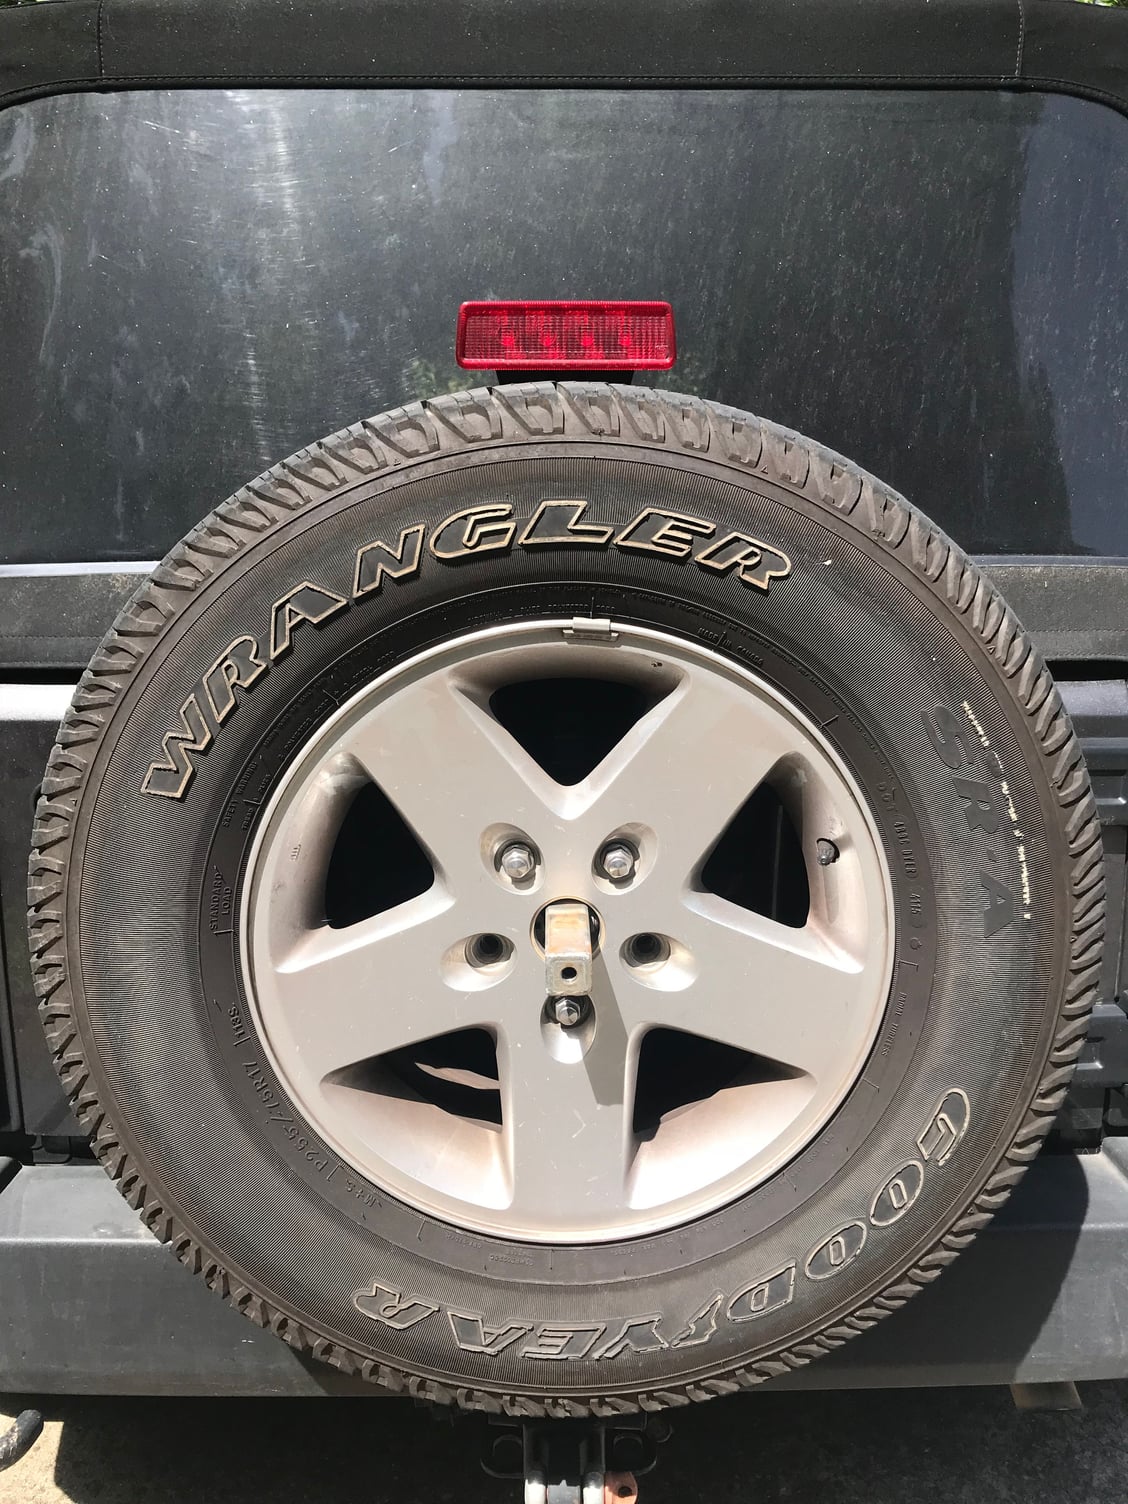 Wheels and Tires/Axles - 5 OEM JK Wheels/Tires/TPMS Sensors - $500 OBO - Used - 2007 to 2018 Jeep Wrangler - Atlanta, GA 30338, United States